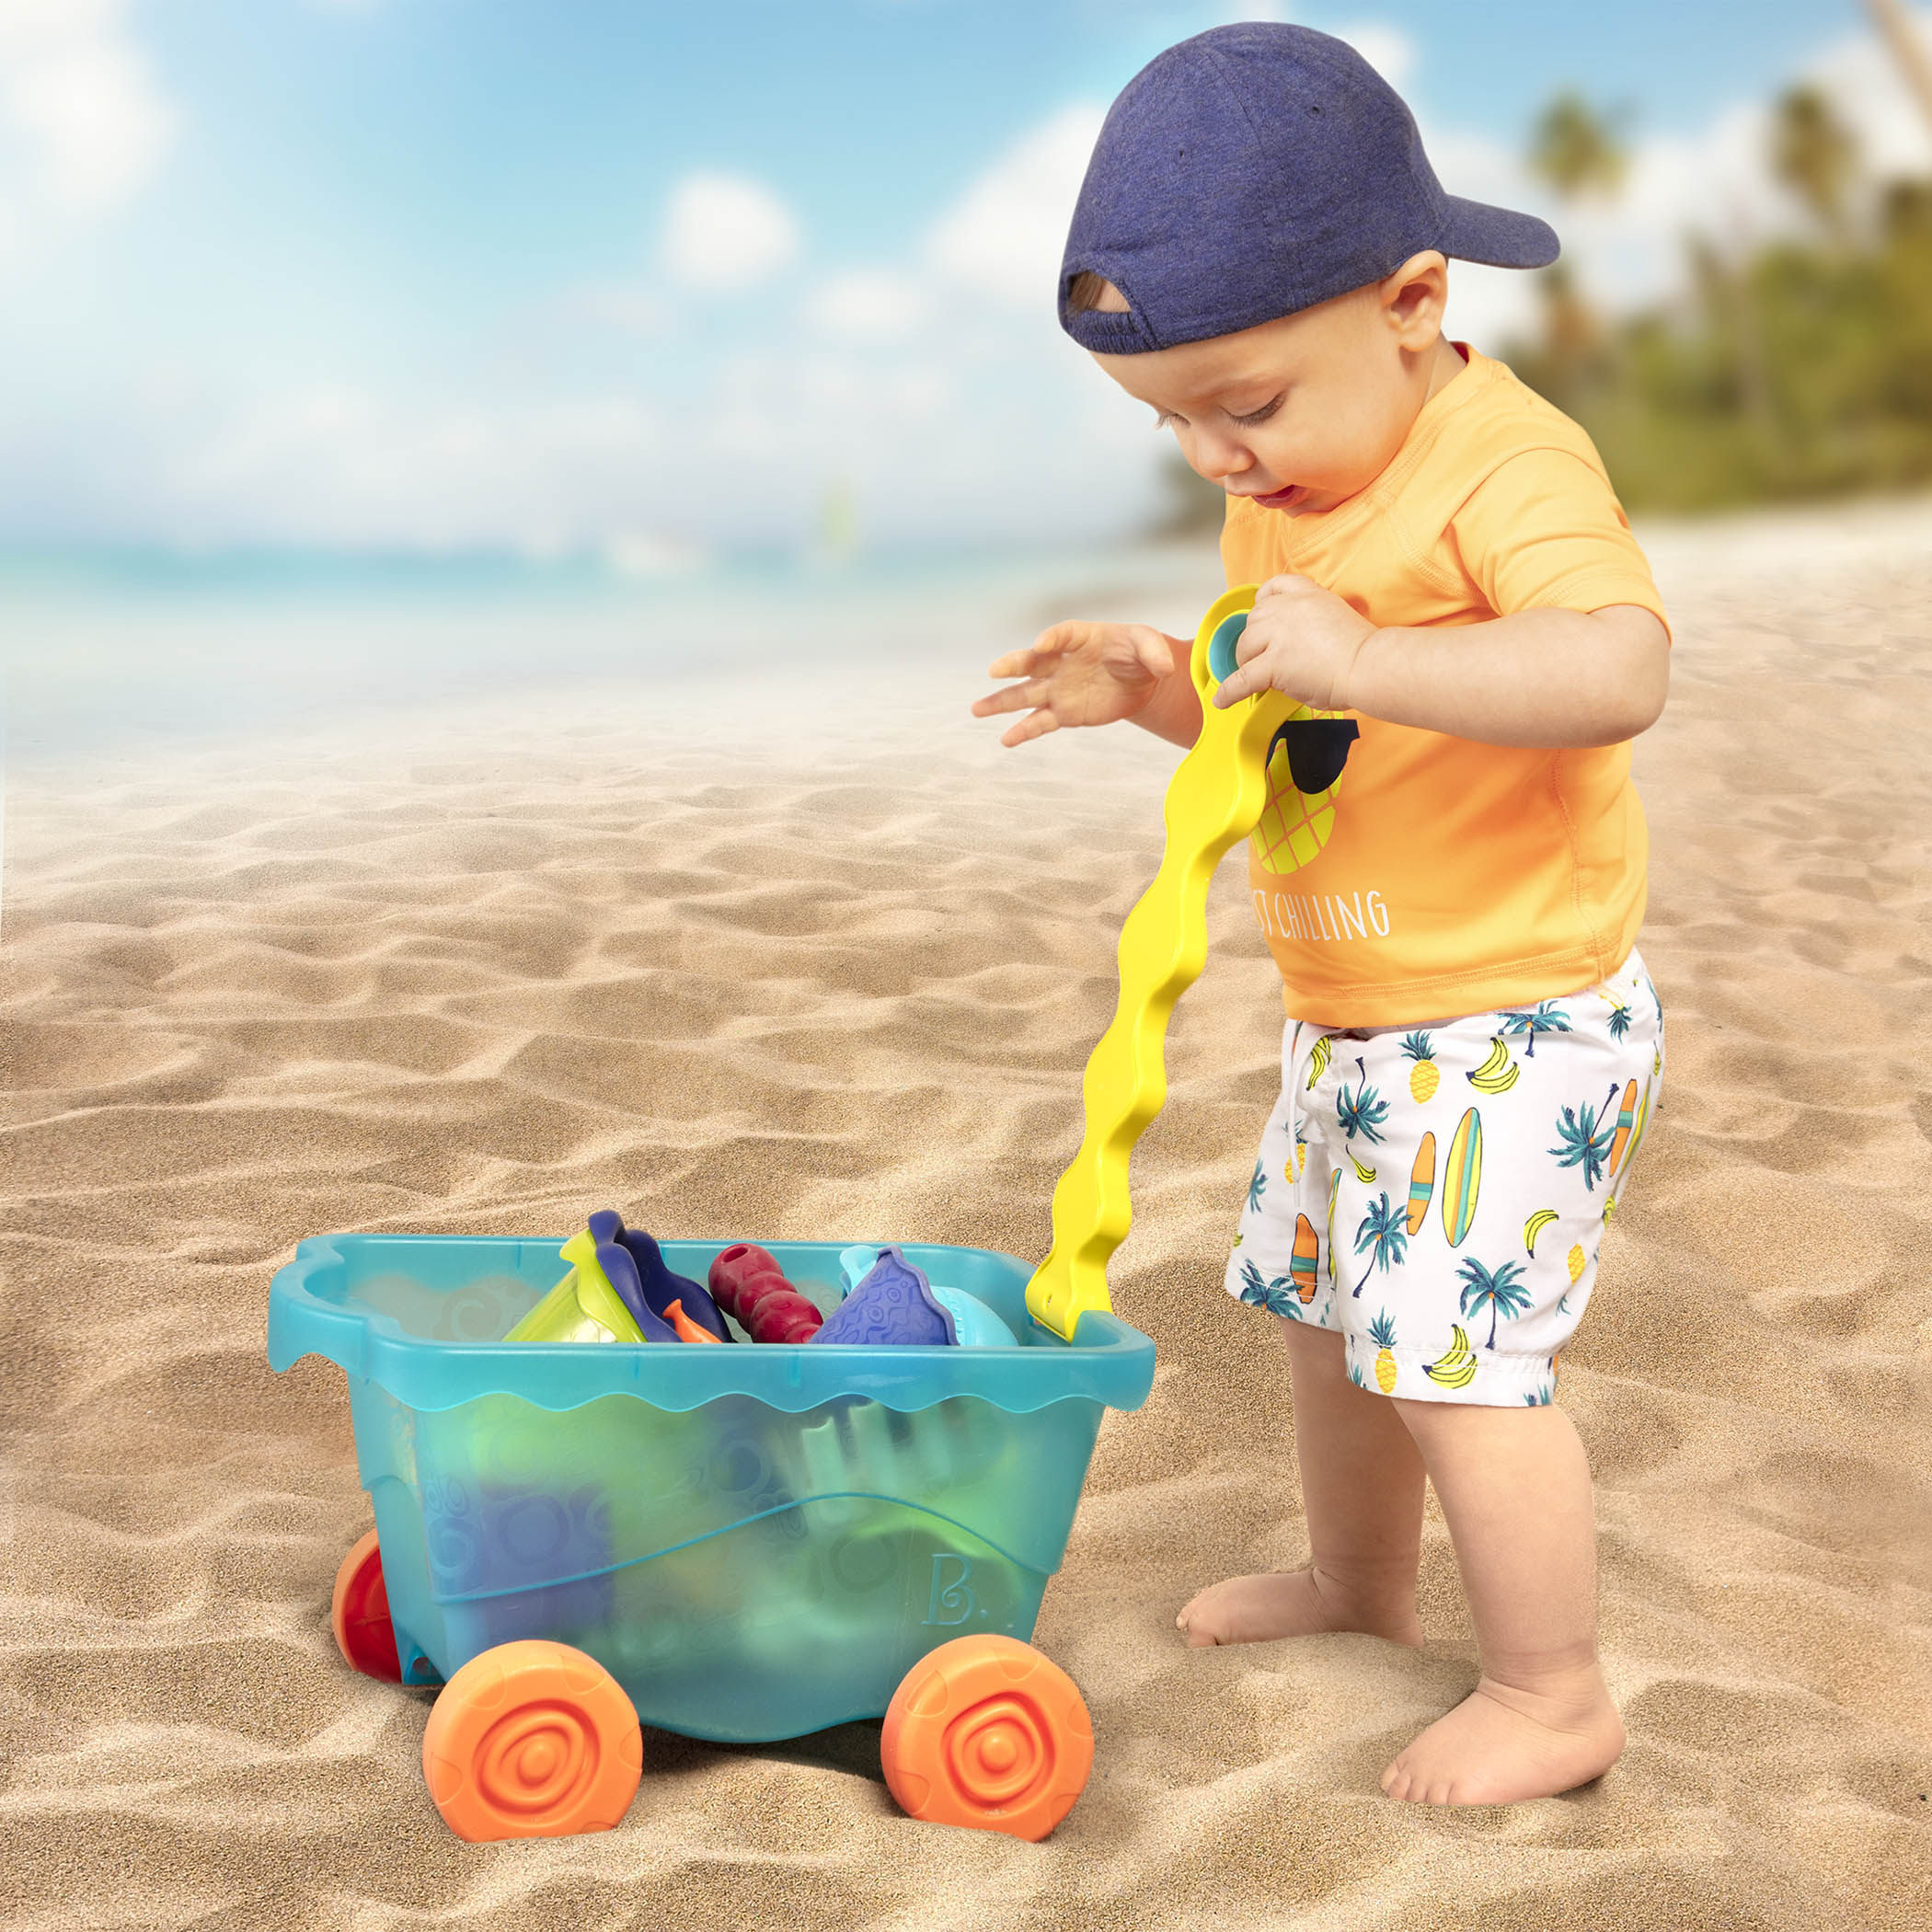 Beach toys and translucent blue wagon